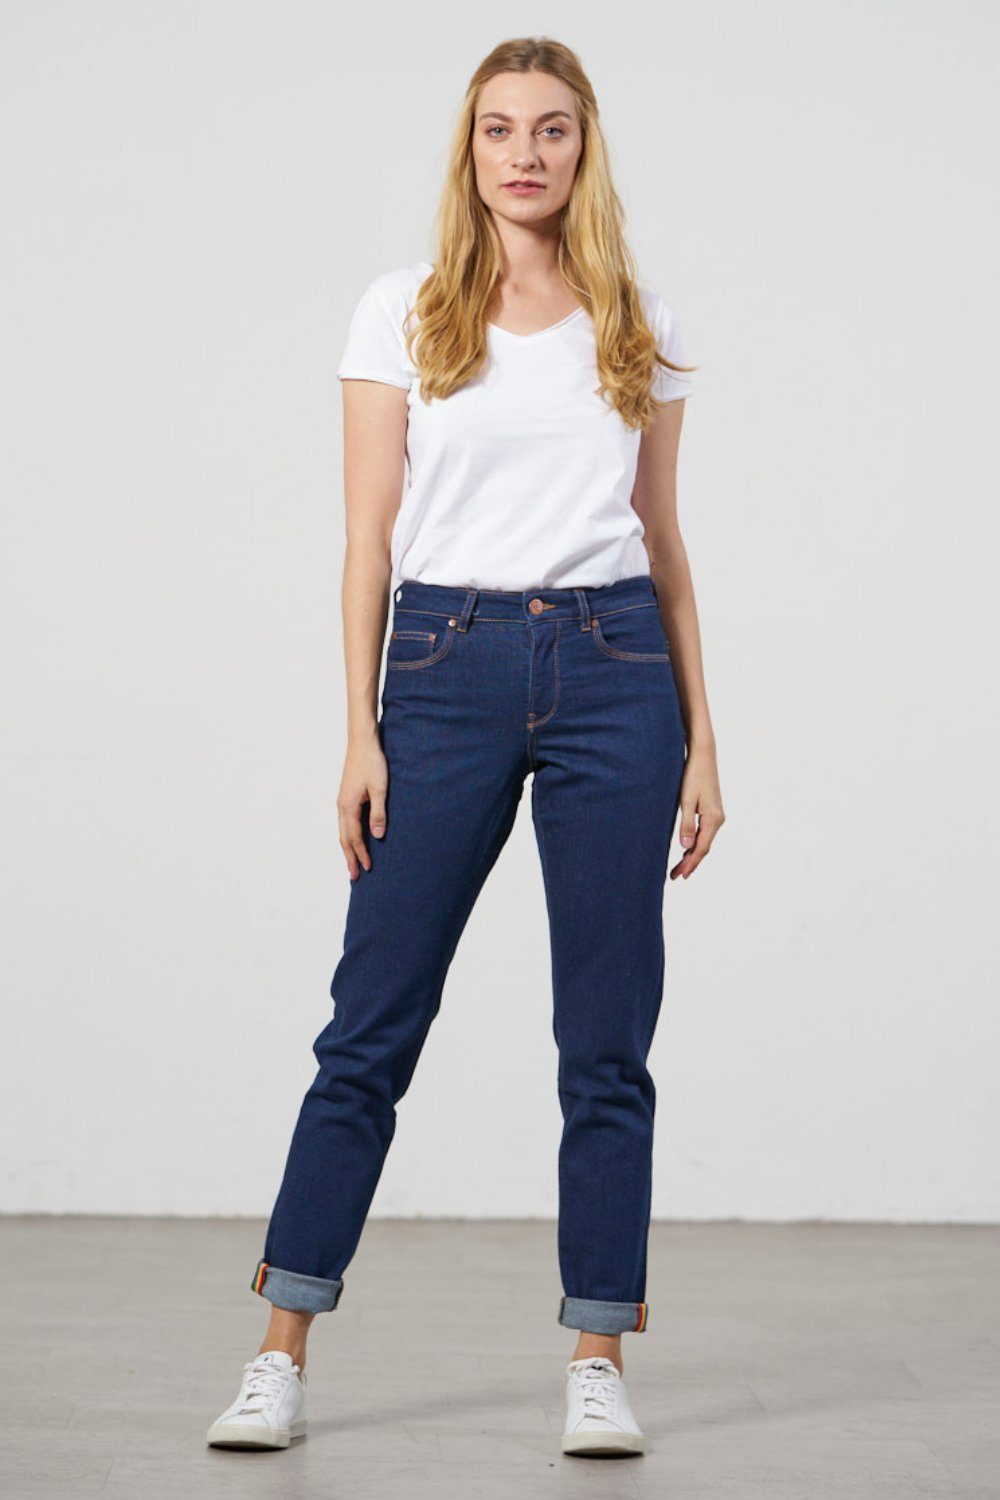 Feuervogl Slim-fit-Jeans fv-West:minster, Slim Fit, Medium Waist, Unisex Slim Fit, Unisex, 5-Pocket-Style, Medium Waist Classic Blue